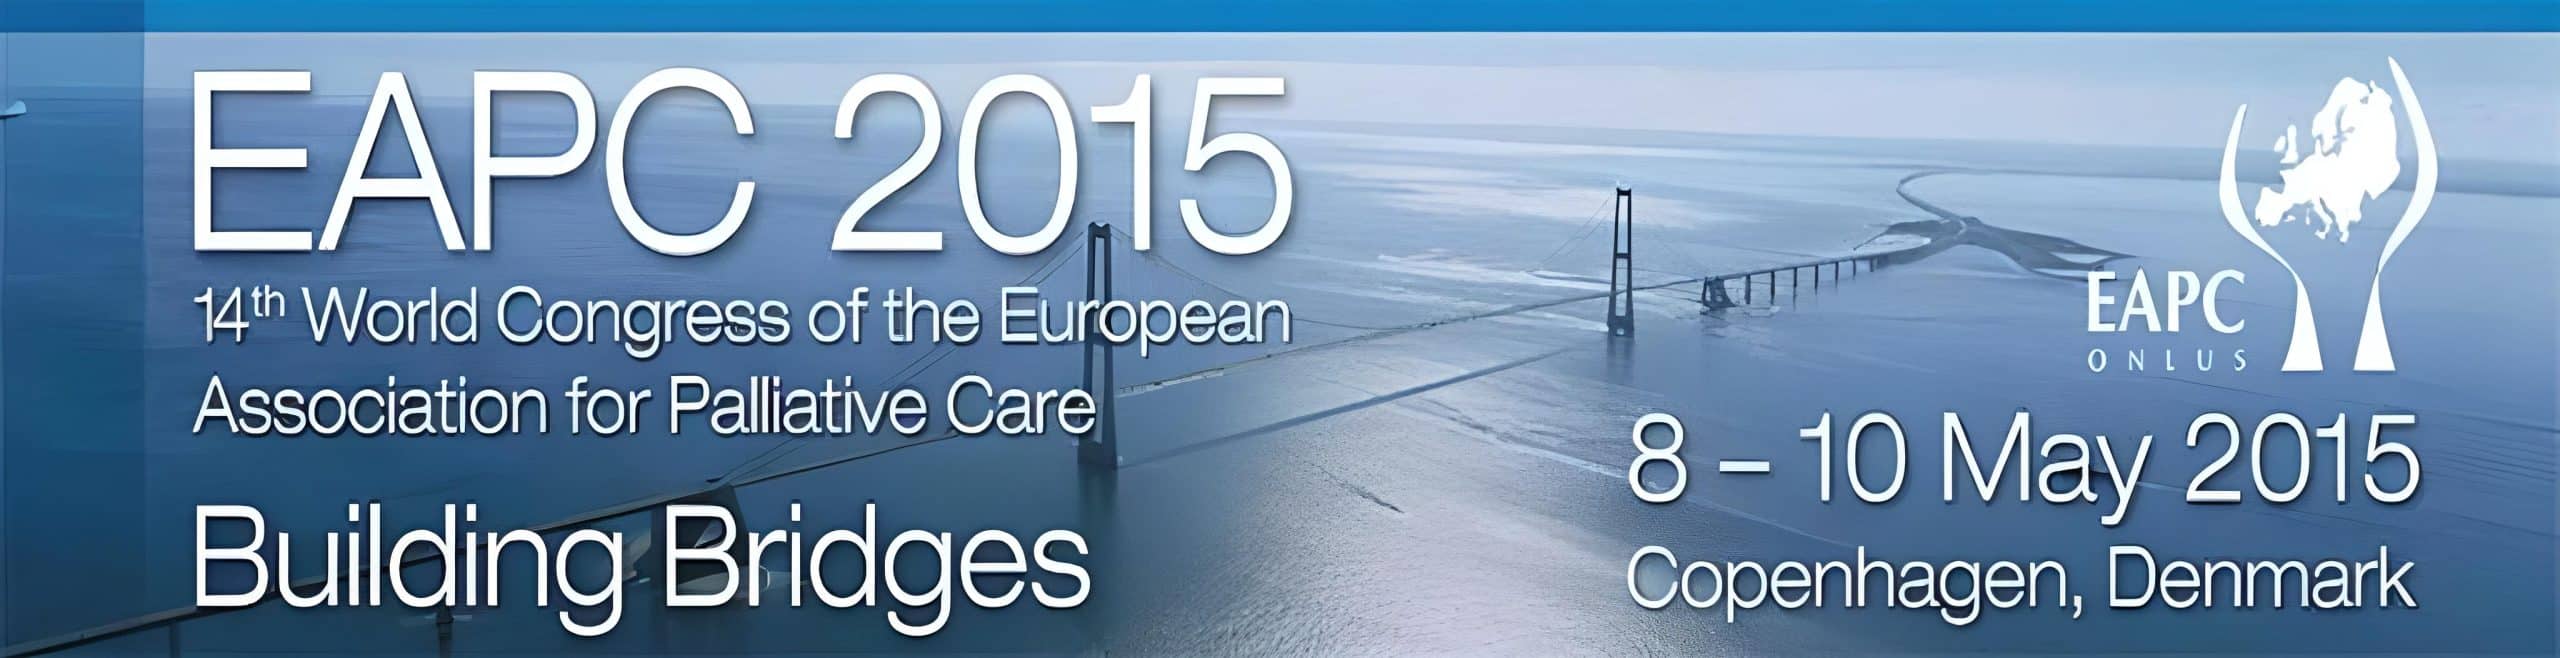 banner 14th world congress of the EAPC Copenhagen 8-10 May 2015